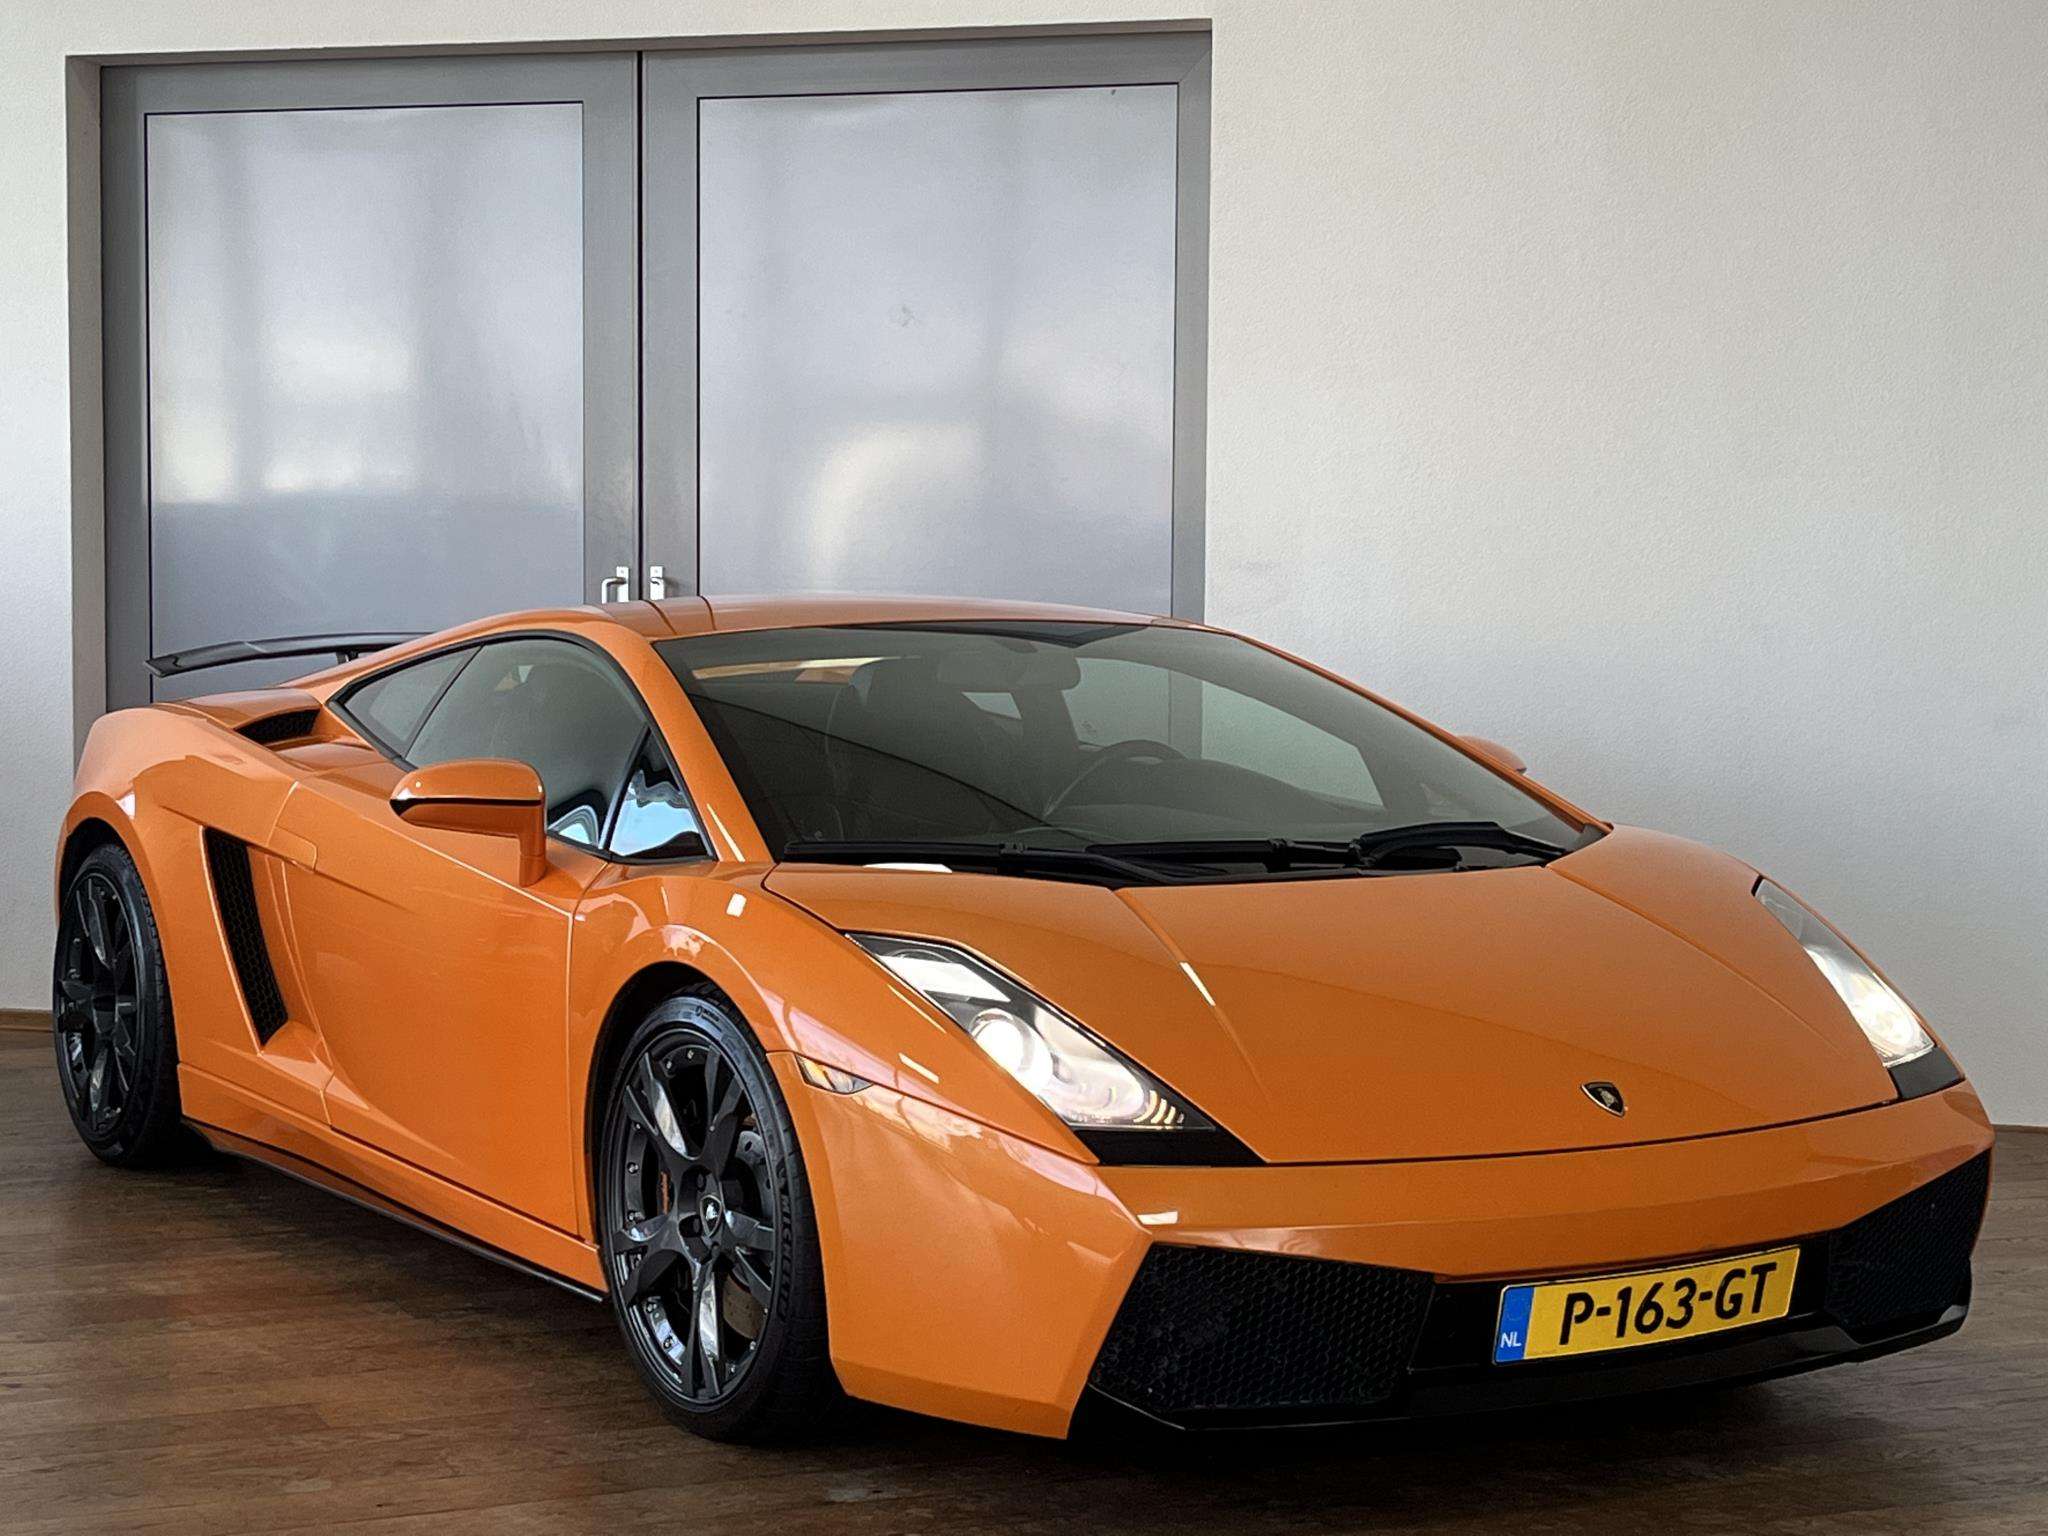 Lamborghini Gallardo Coupe in Orange used in HOOGEVEEN for € 99,950.-